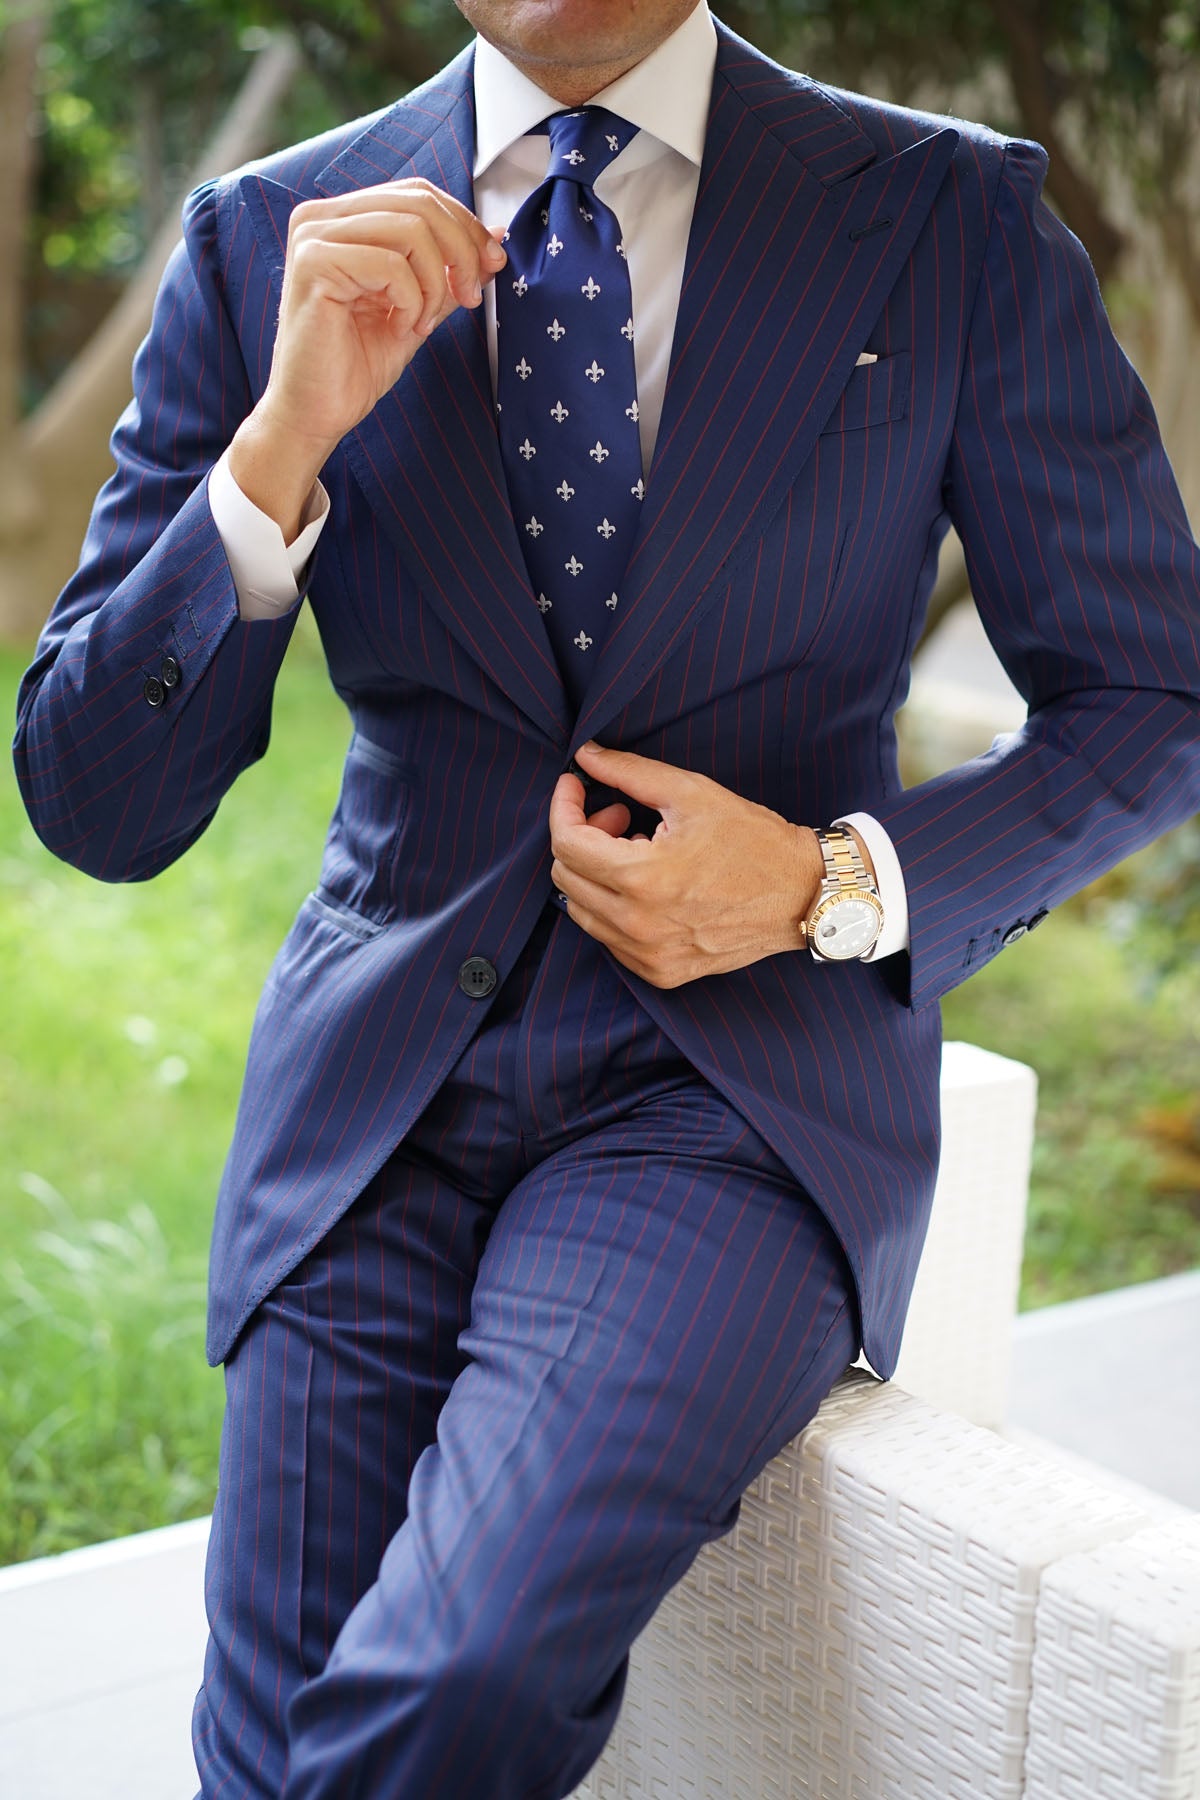 Fleur De Lis Tie | Royal Lily Flower Neckties | Luxury Ties for Men AU ...